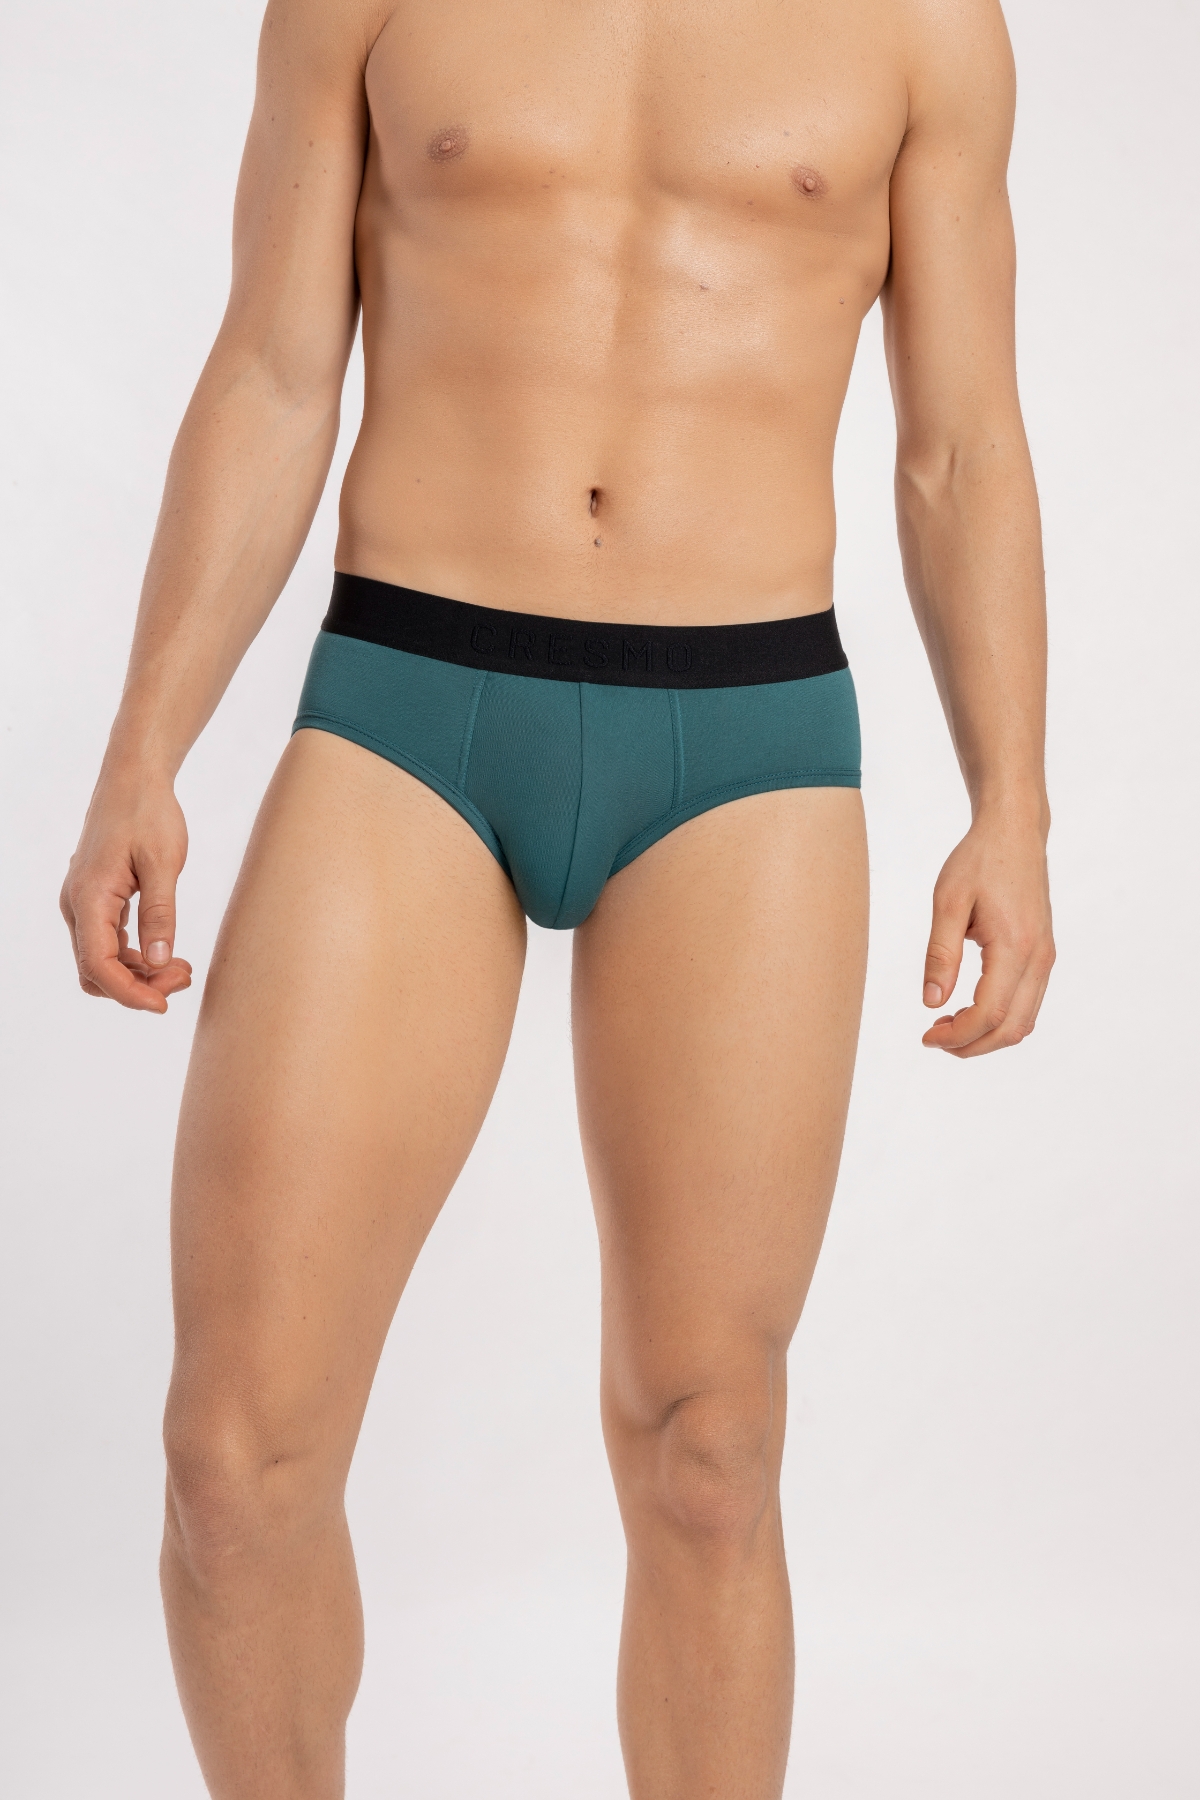 CRESMO | CRESMO Men's Luxury Anti-Microbial Micro Modal Underwear Breathable Ultra Soft Comfort Lightweight Brief 3